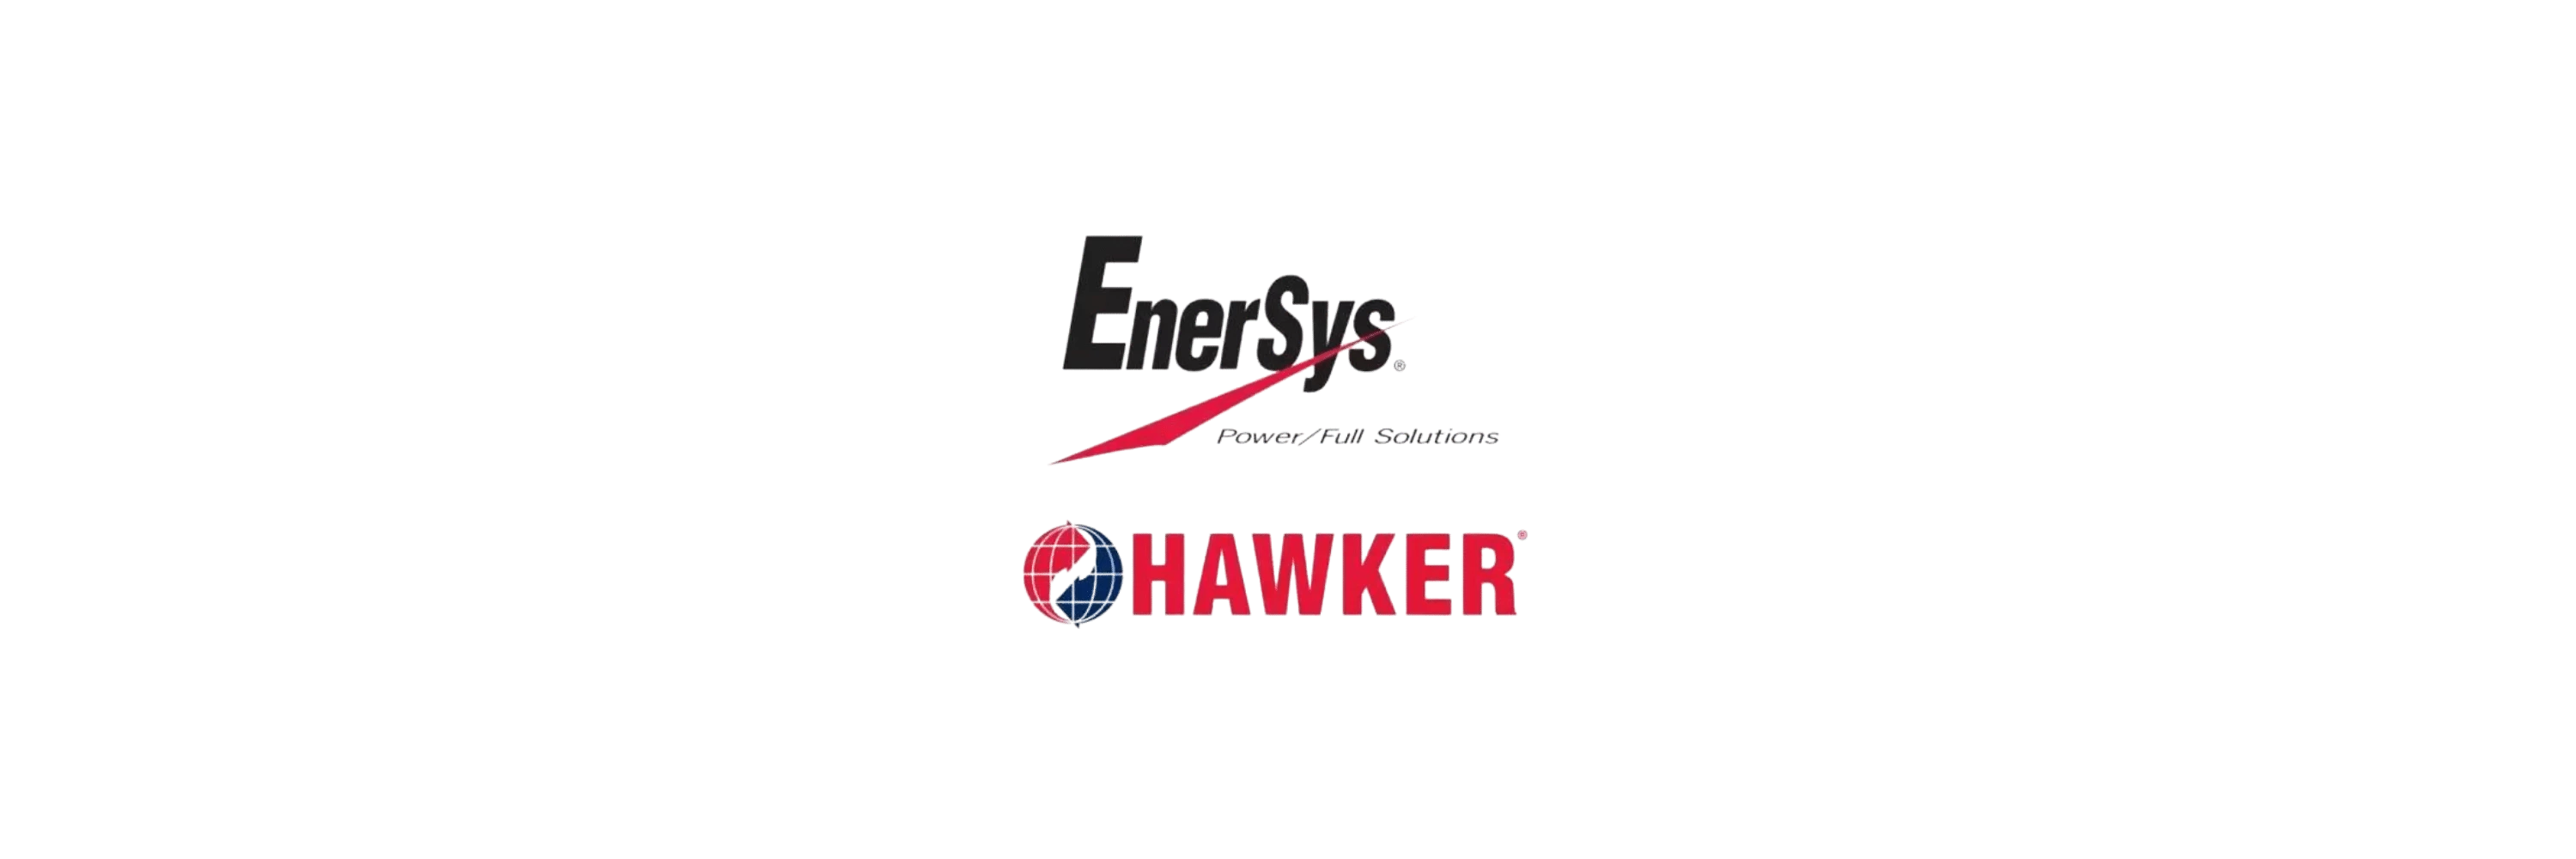 Hawker / EnerSys - Klenk Maschinenhandel